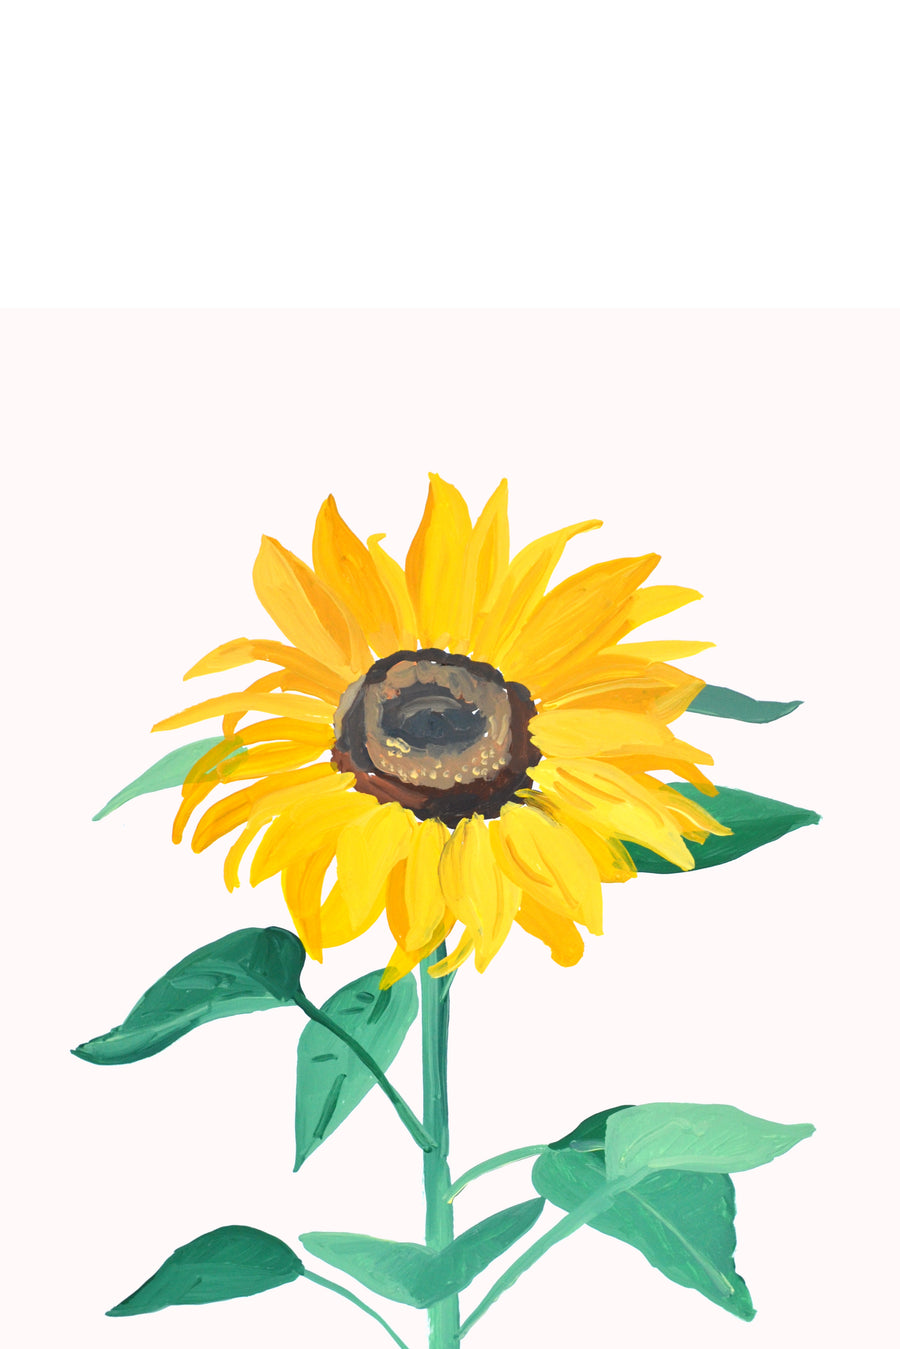 A Single Sunflower